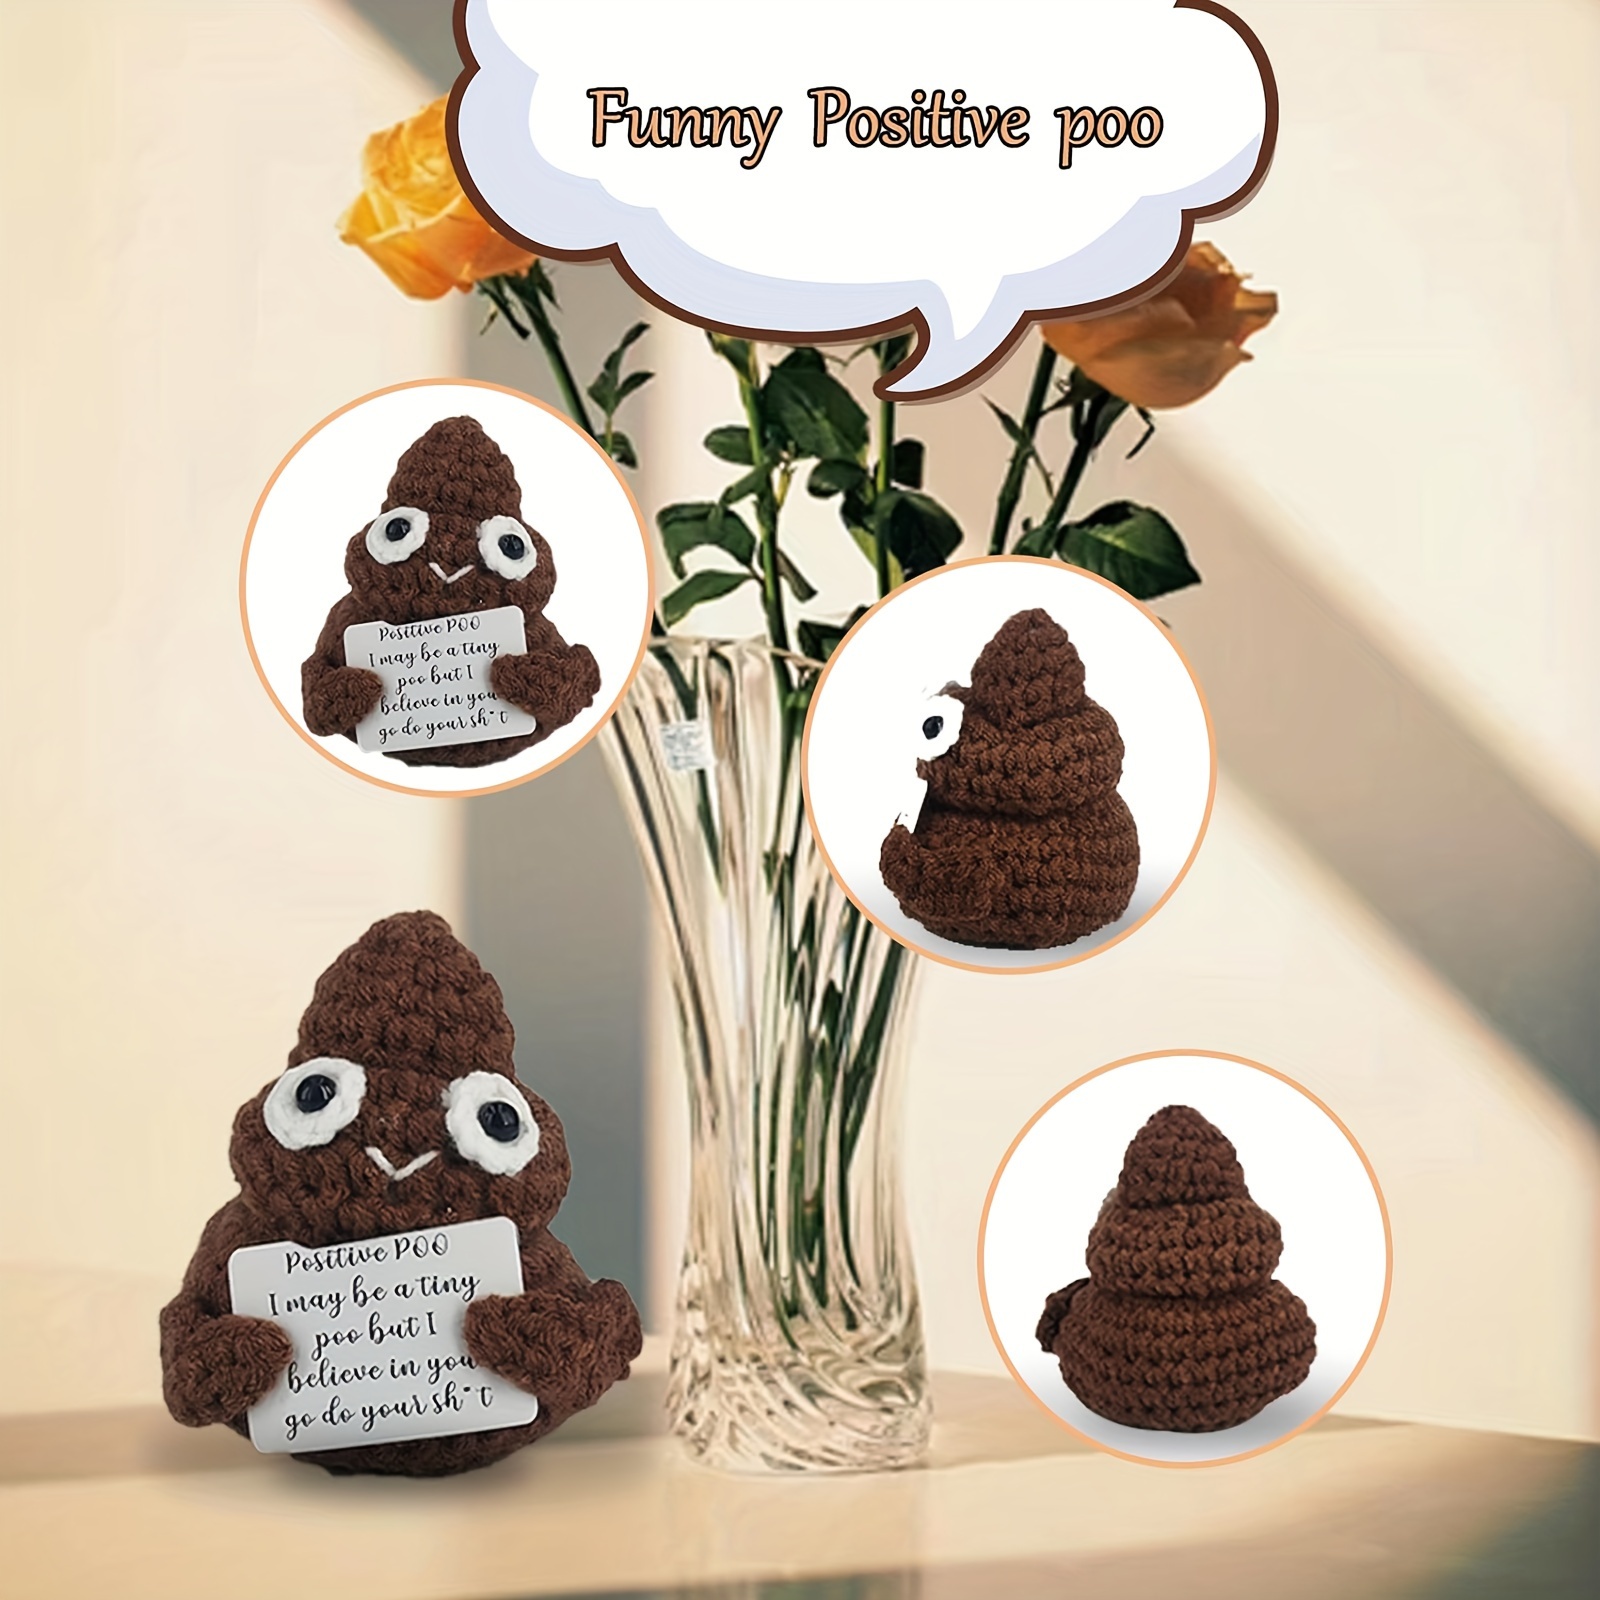  DSLSQD Mini Funny Positive Poo, 3 Inch Positive Poo